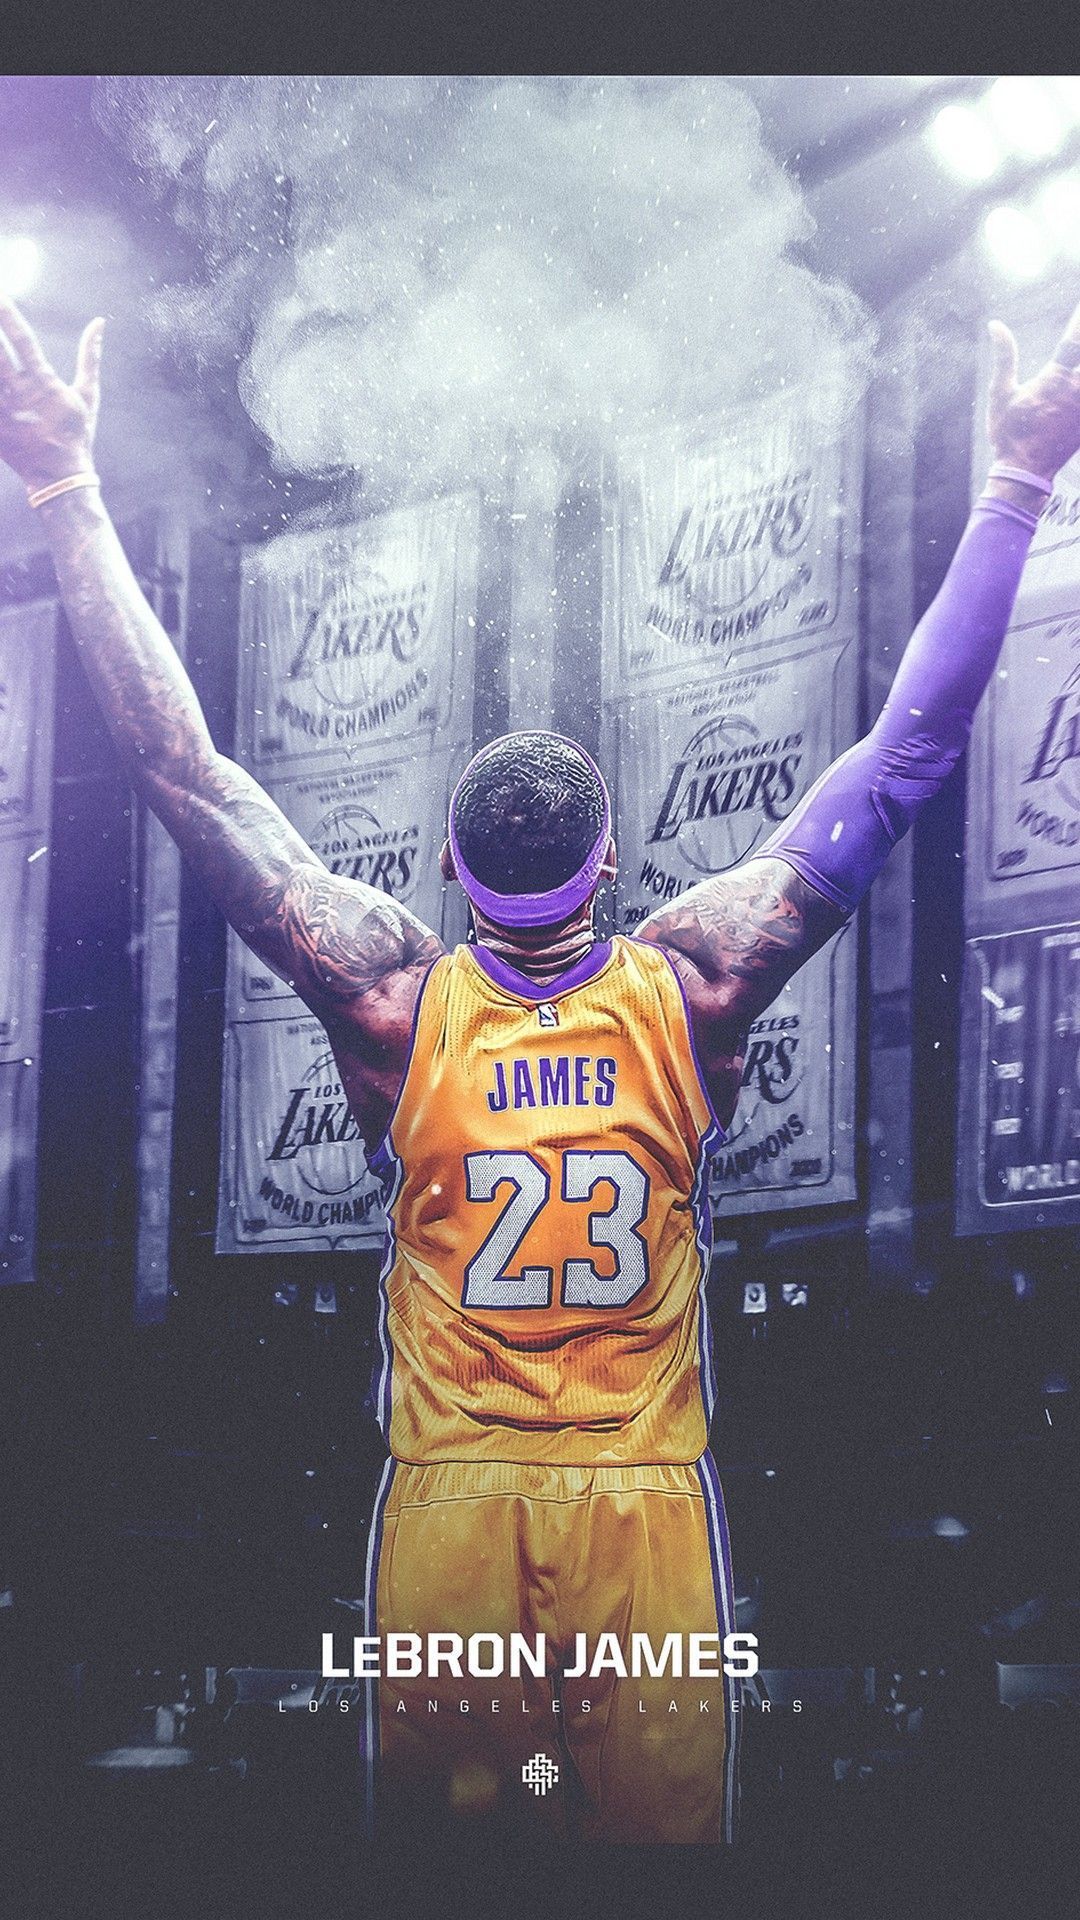 LeBron James LA Lakers HD Wallpaper For iPhone Basketball Wallpaper. Lebron james wallpaper, Basketball wallpaper hd, Lebron james poster